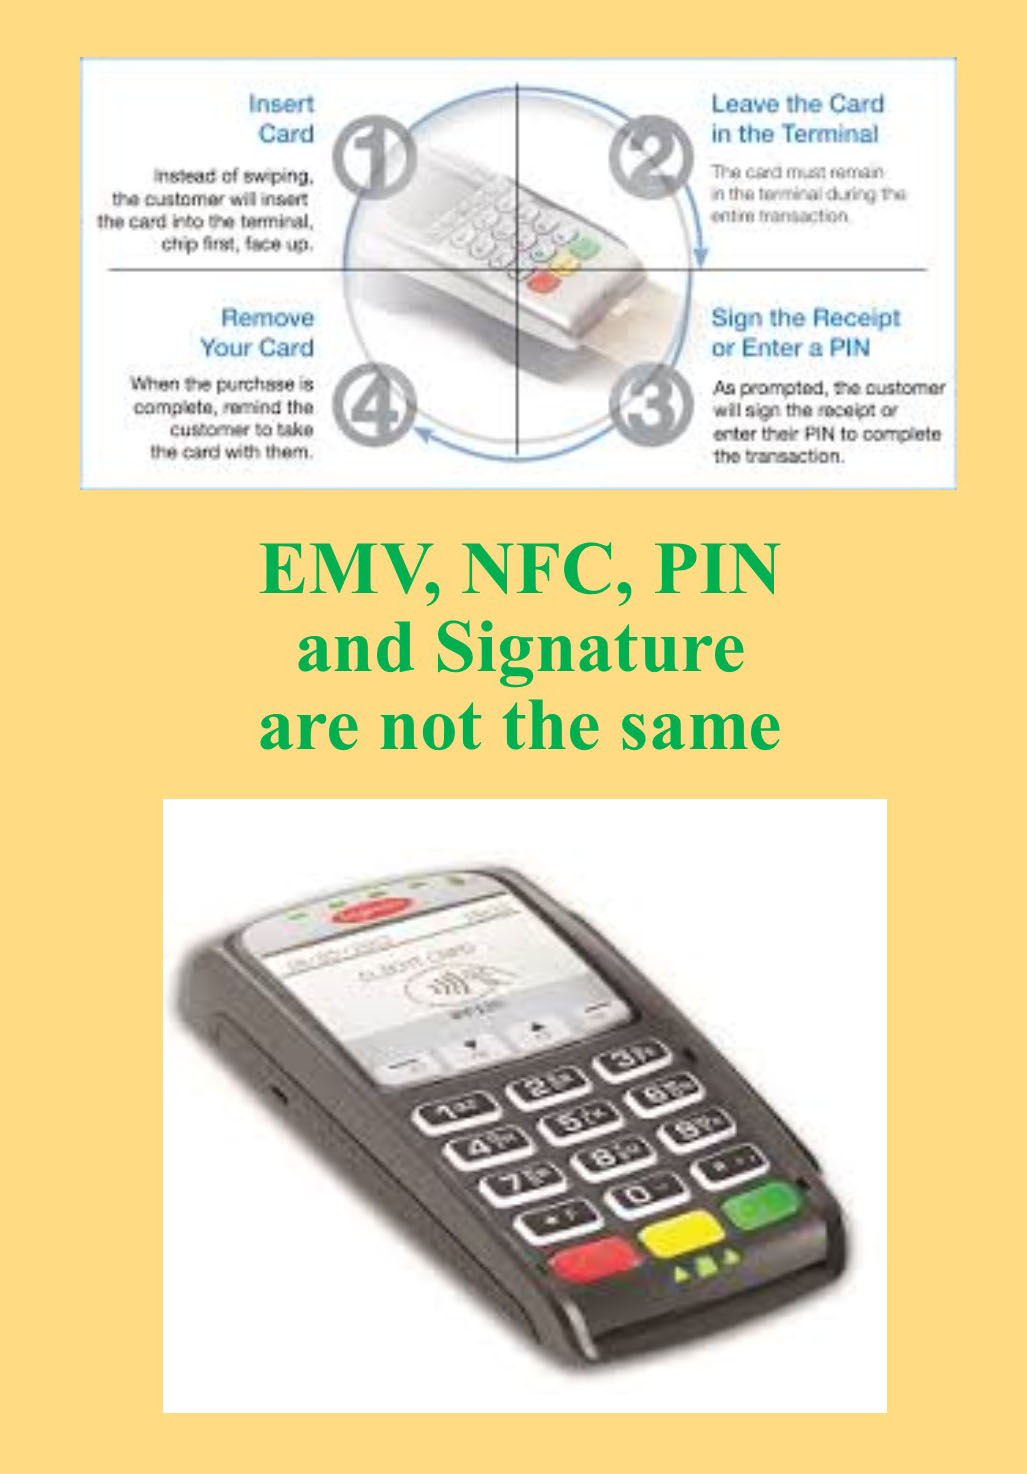 EMV NFC PIN SIGNATURE